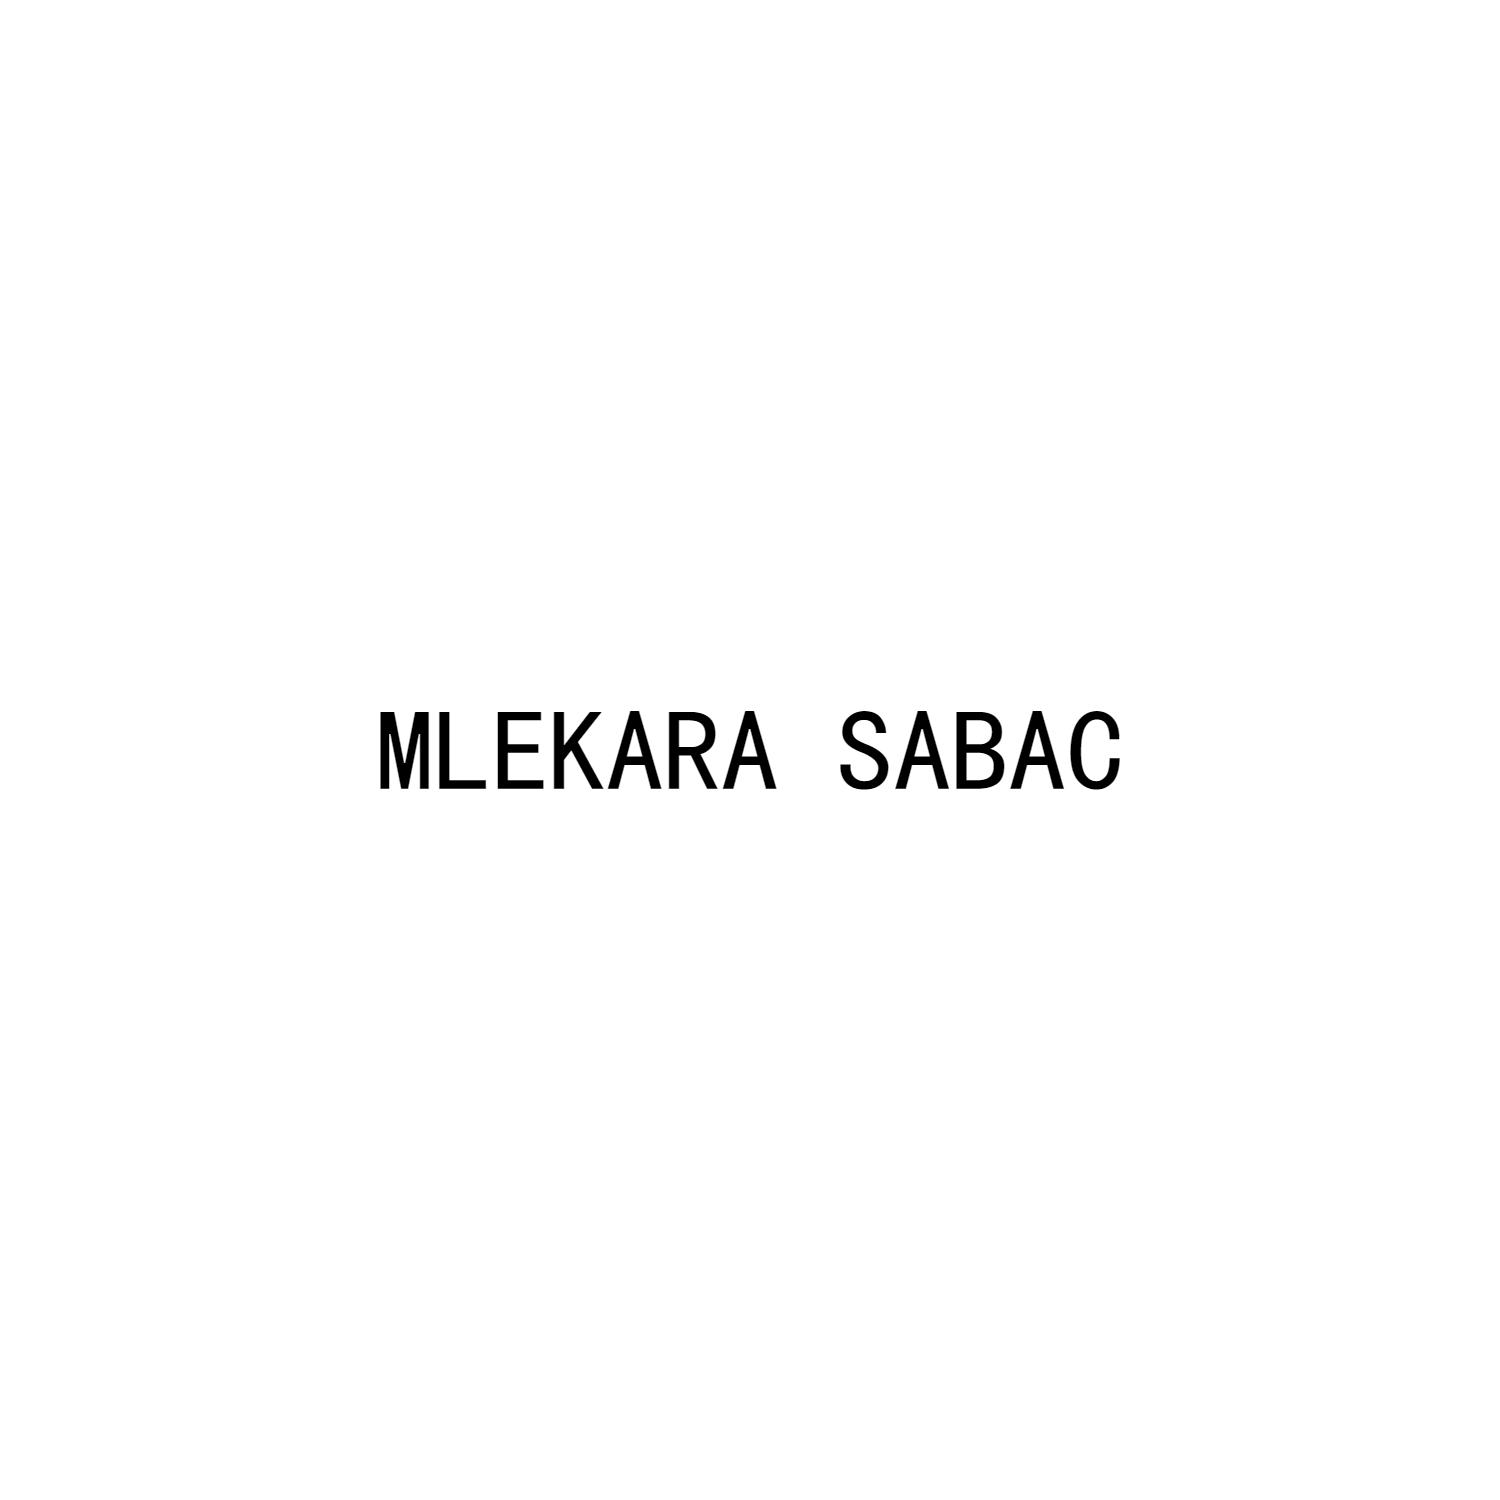 MLEKARA SABAC